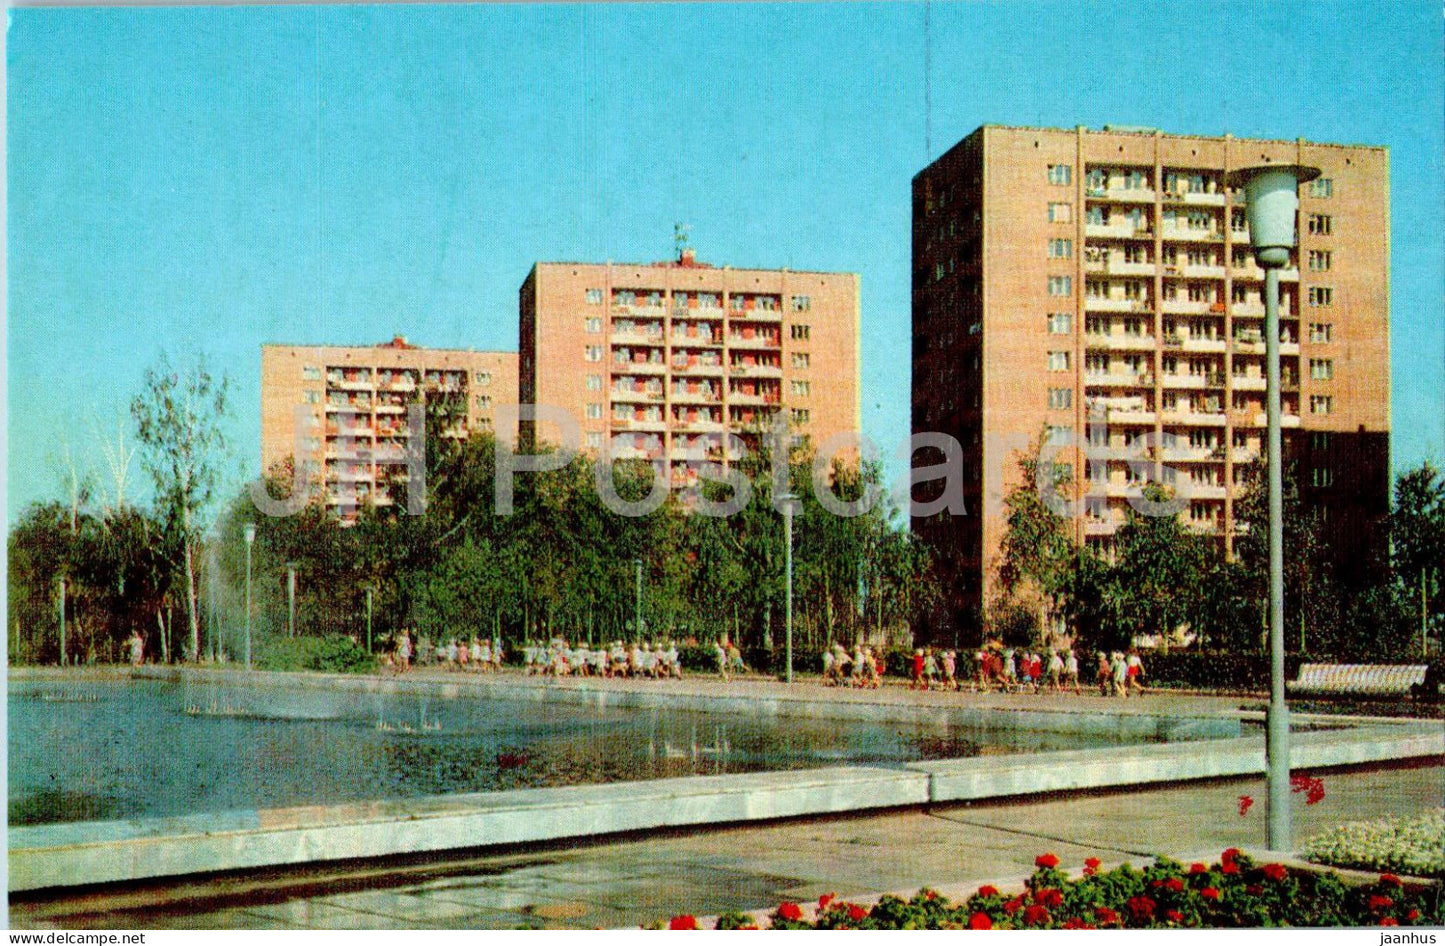 Izhevsk - New residential buildings - 1978 - Udmurtia - Russia USSR - unused - JH Postcards